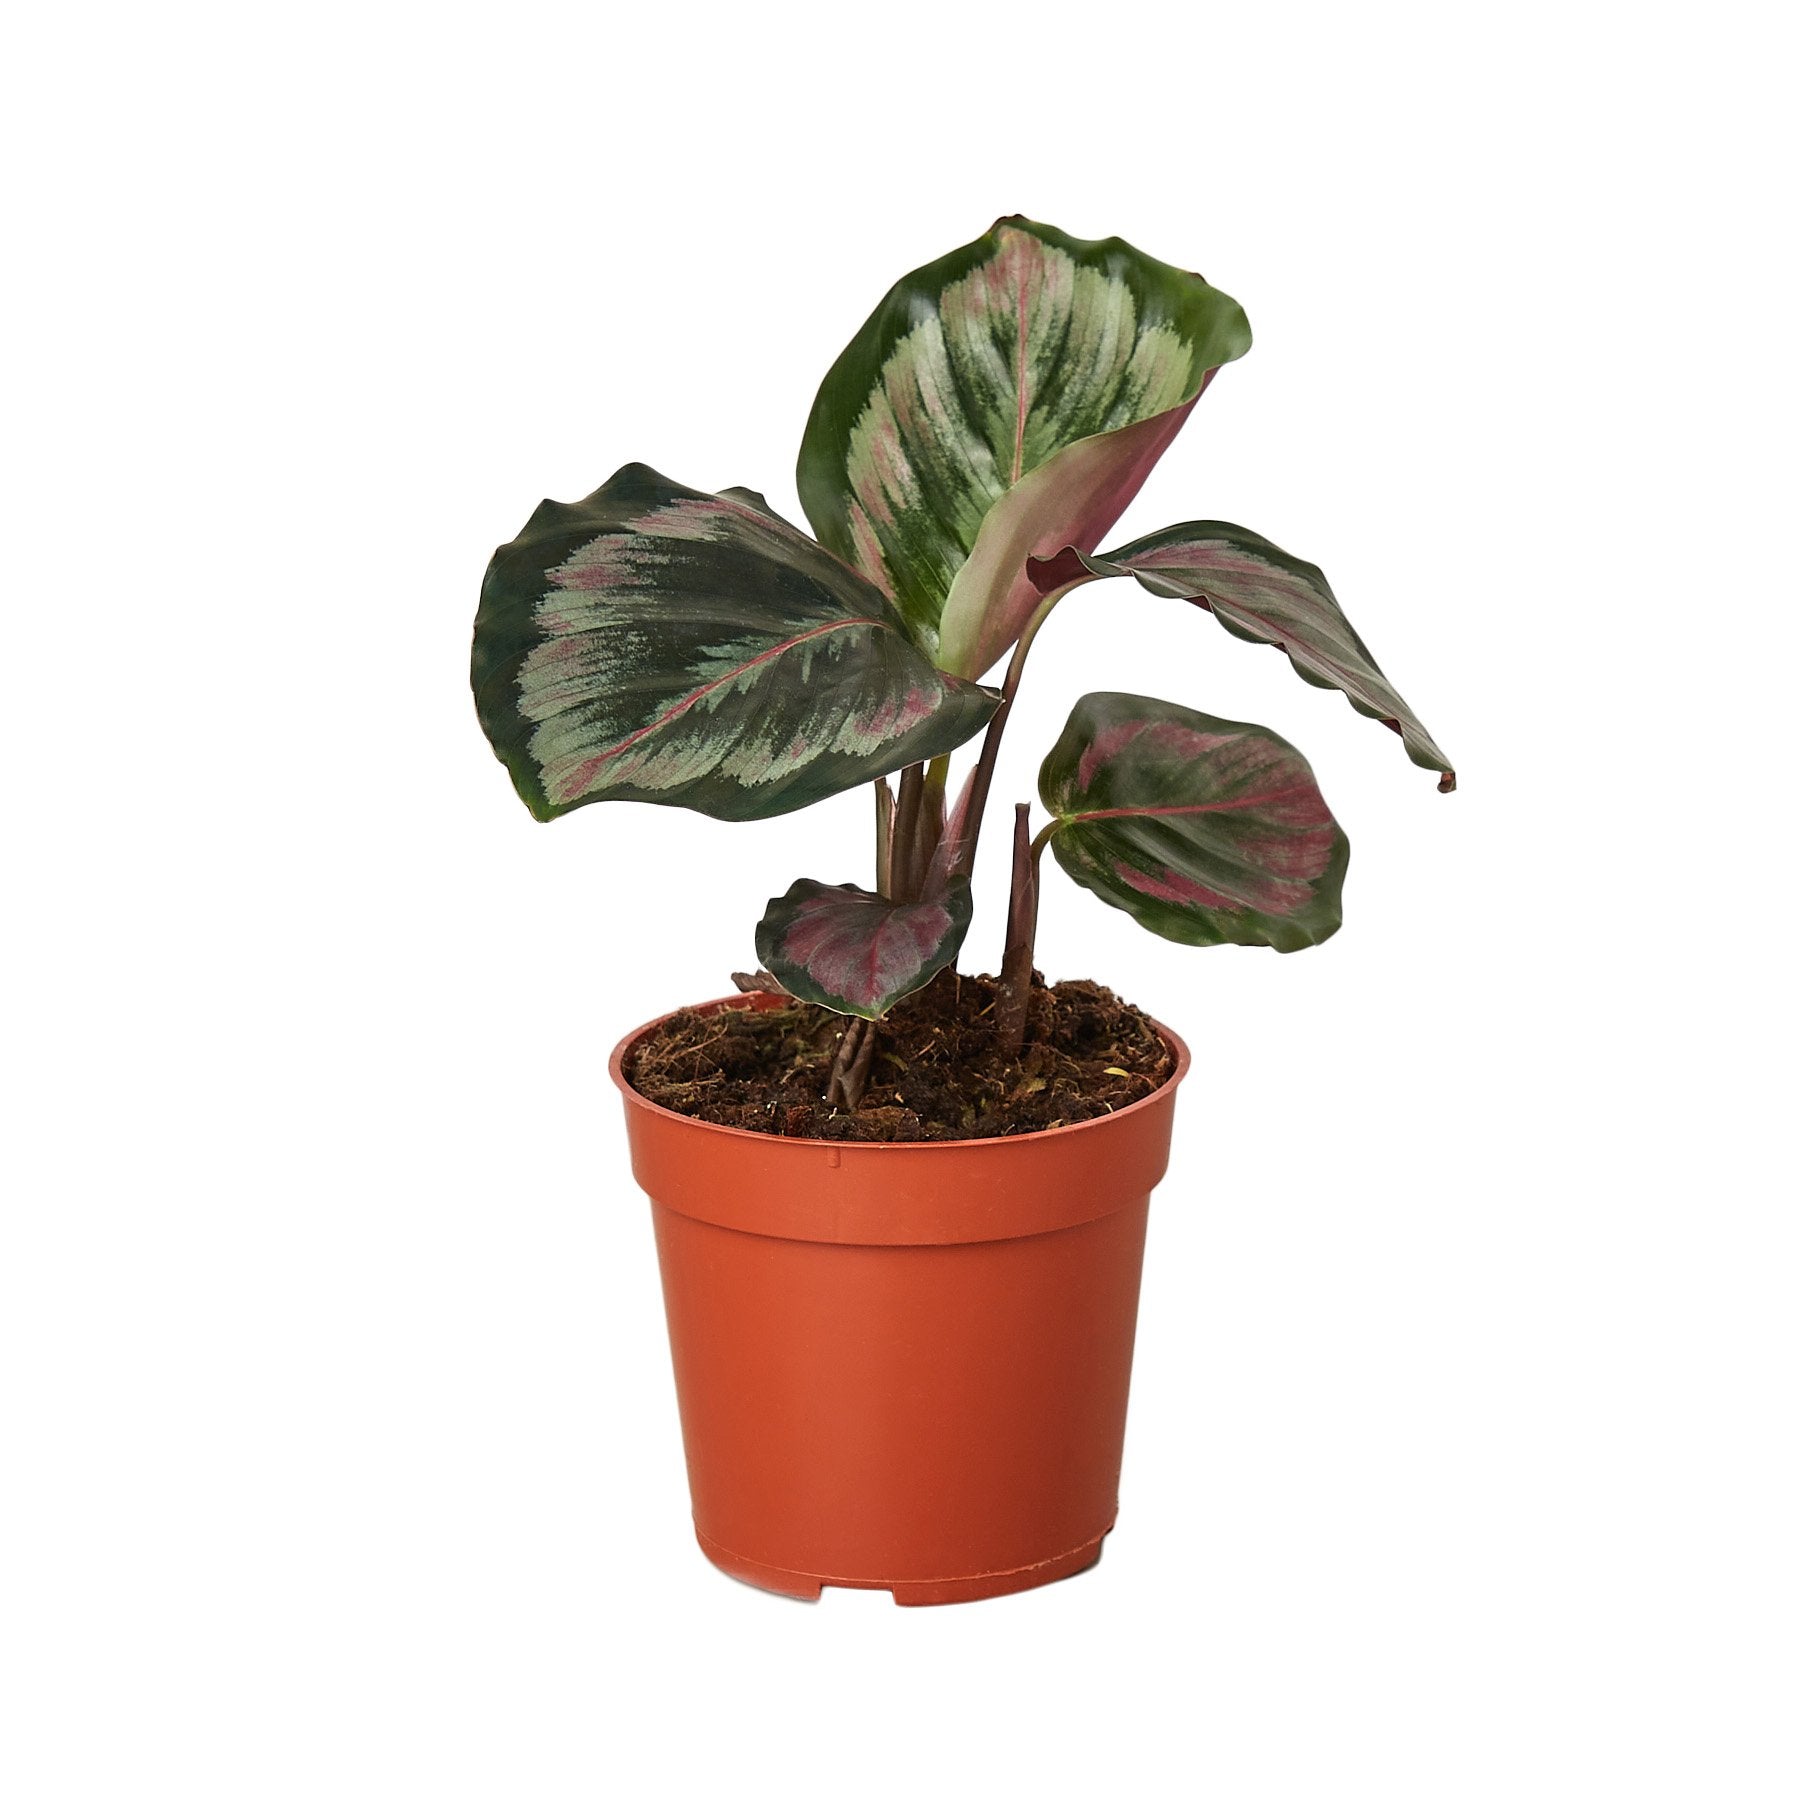 Calathea Roseopicta 'Medallion' II - 4" Pot - Plant Swag Shop 